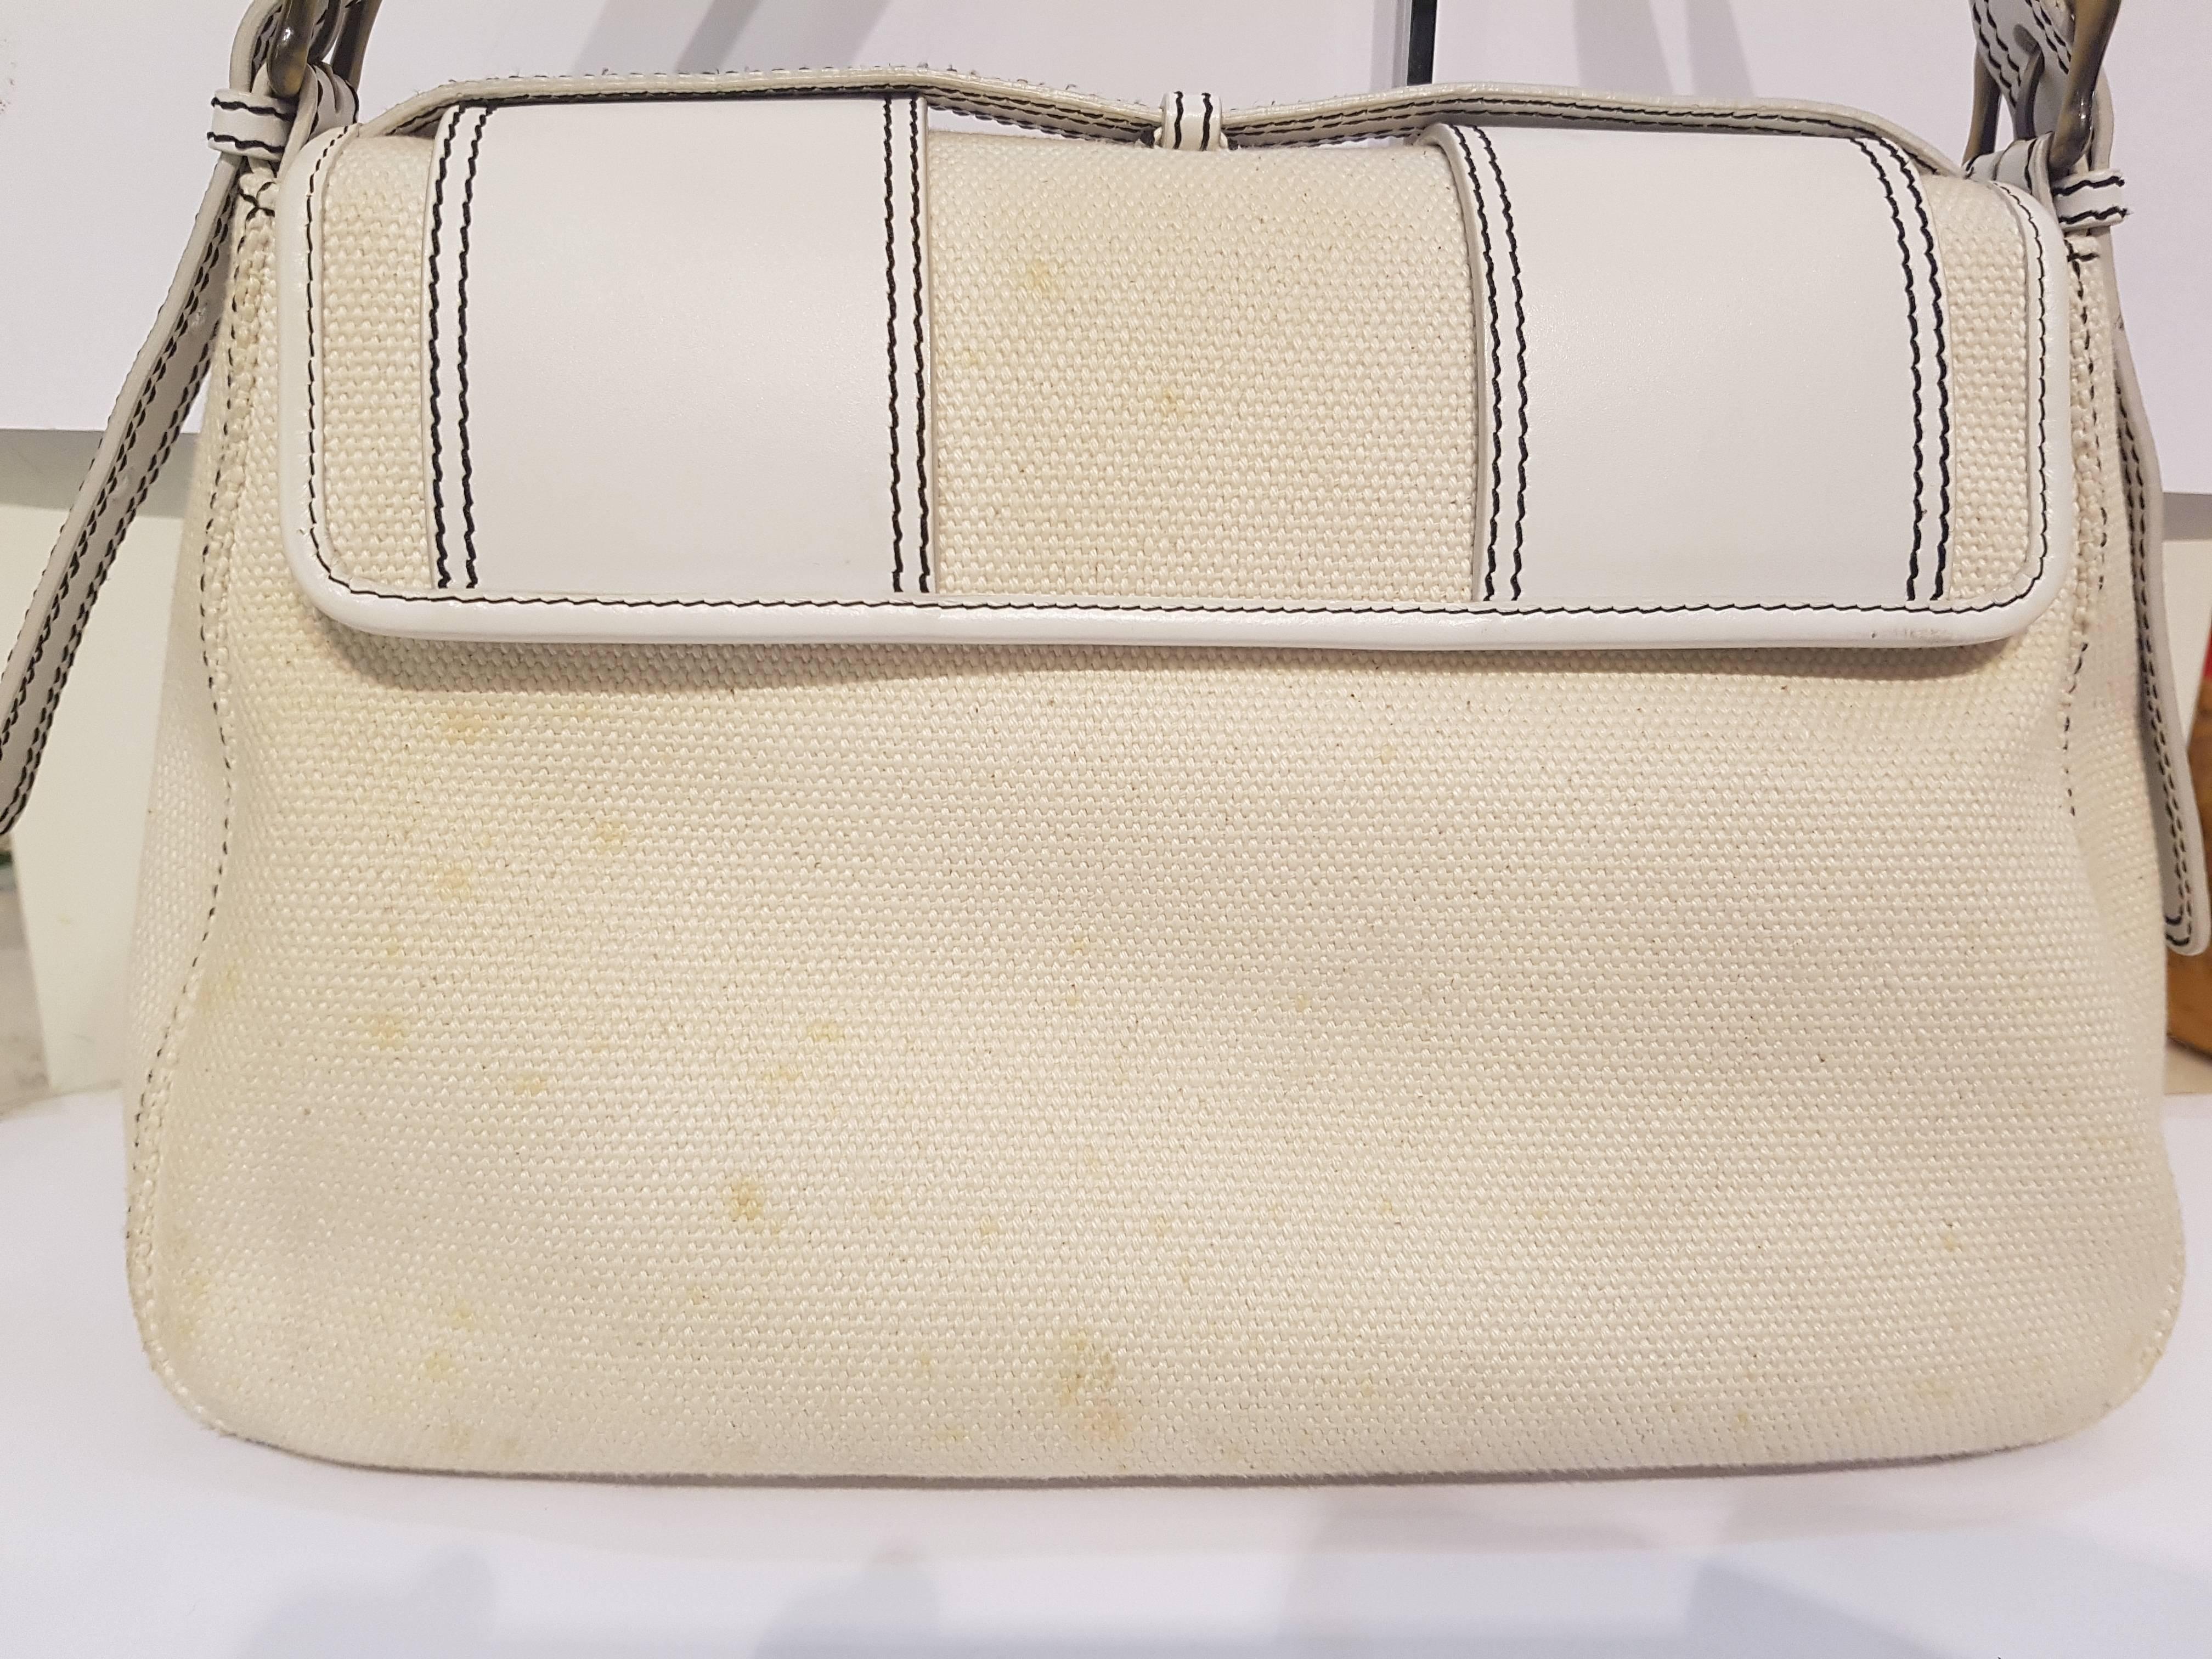 Fendi B White Bag
White leathern and textile white leather shoulder bag